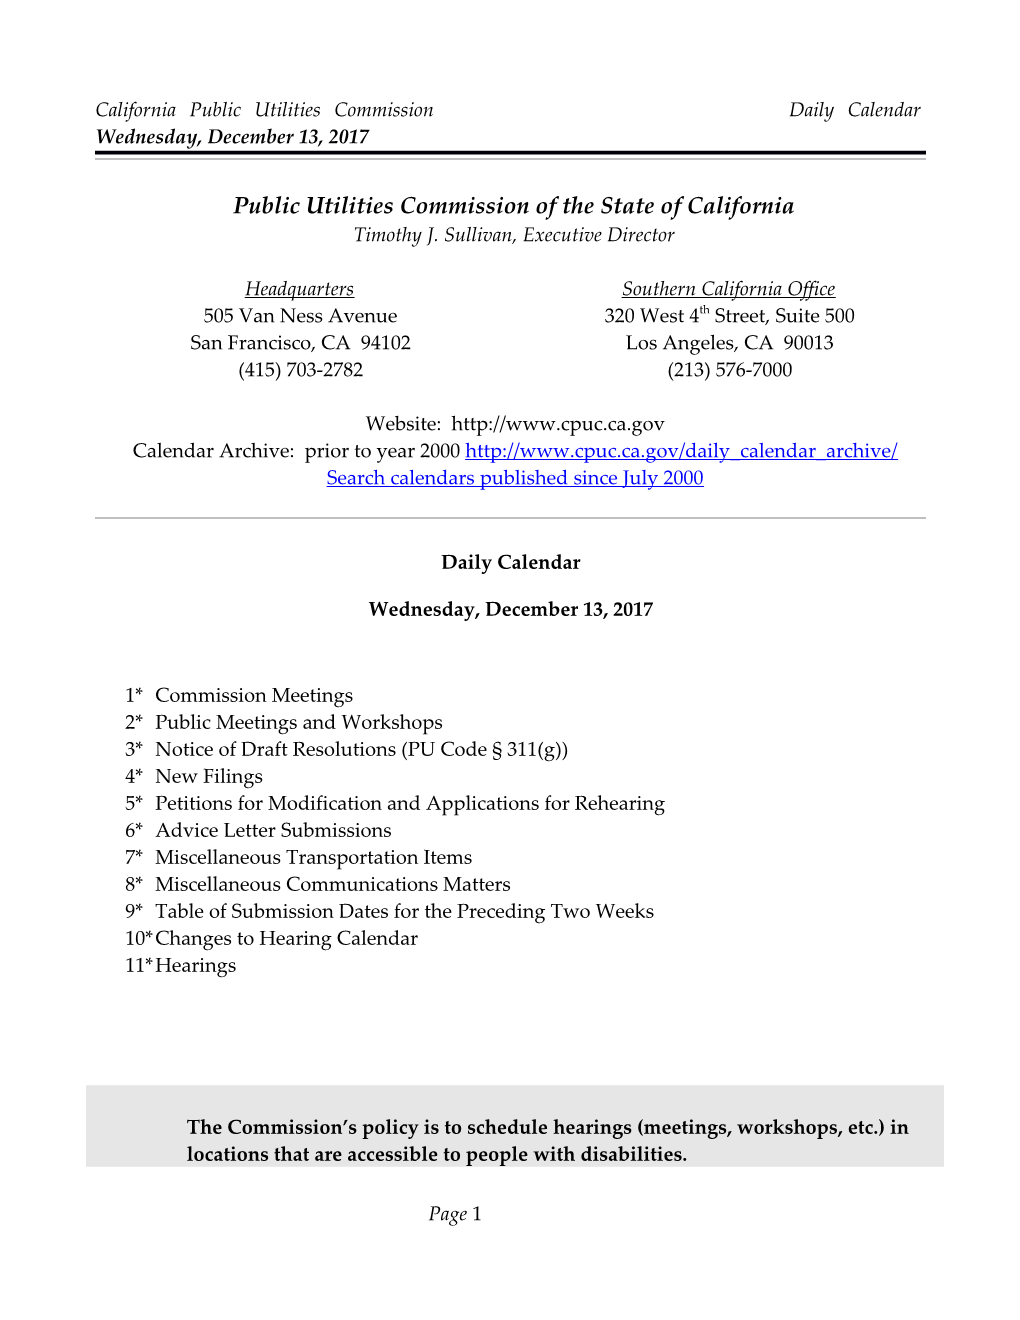 California Public Utilities Commission Daily Calendar Wednesday, December 13, 2017